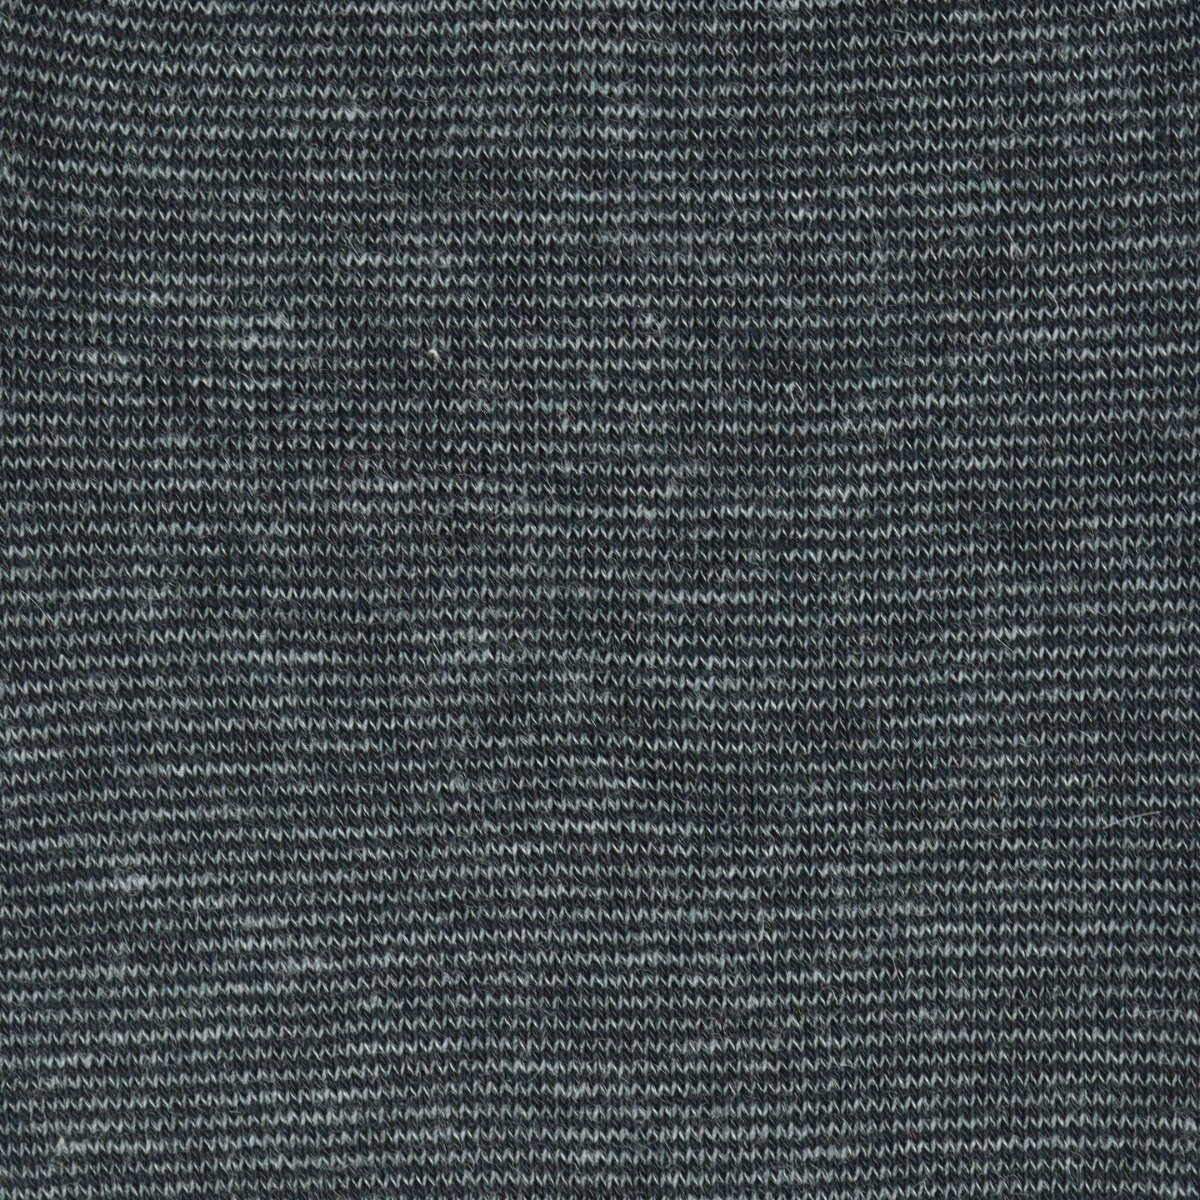 Corgi charcoal micro stripe cashmere cotton socks